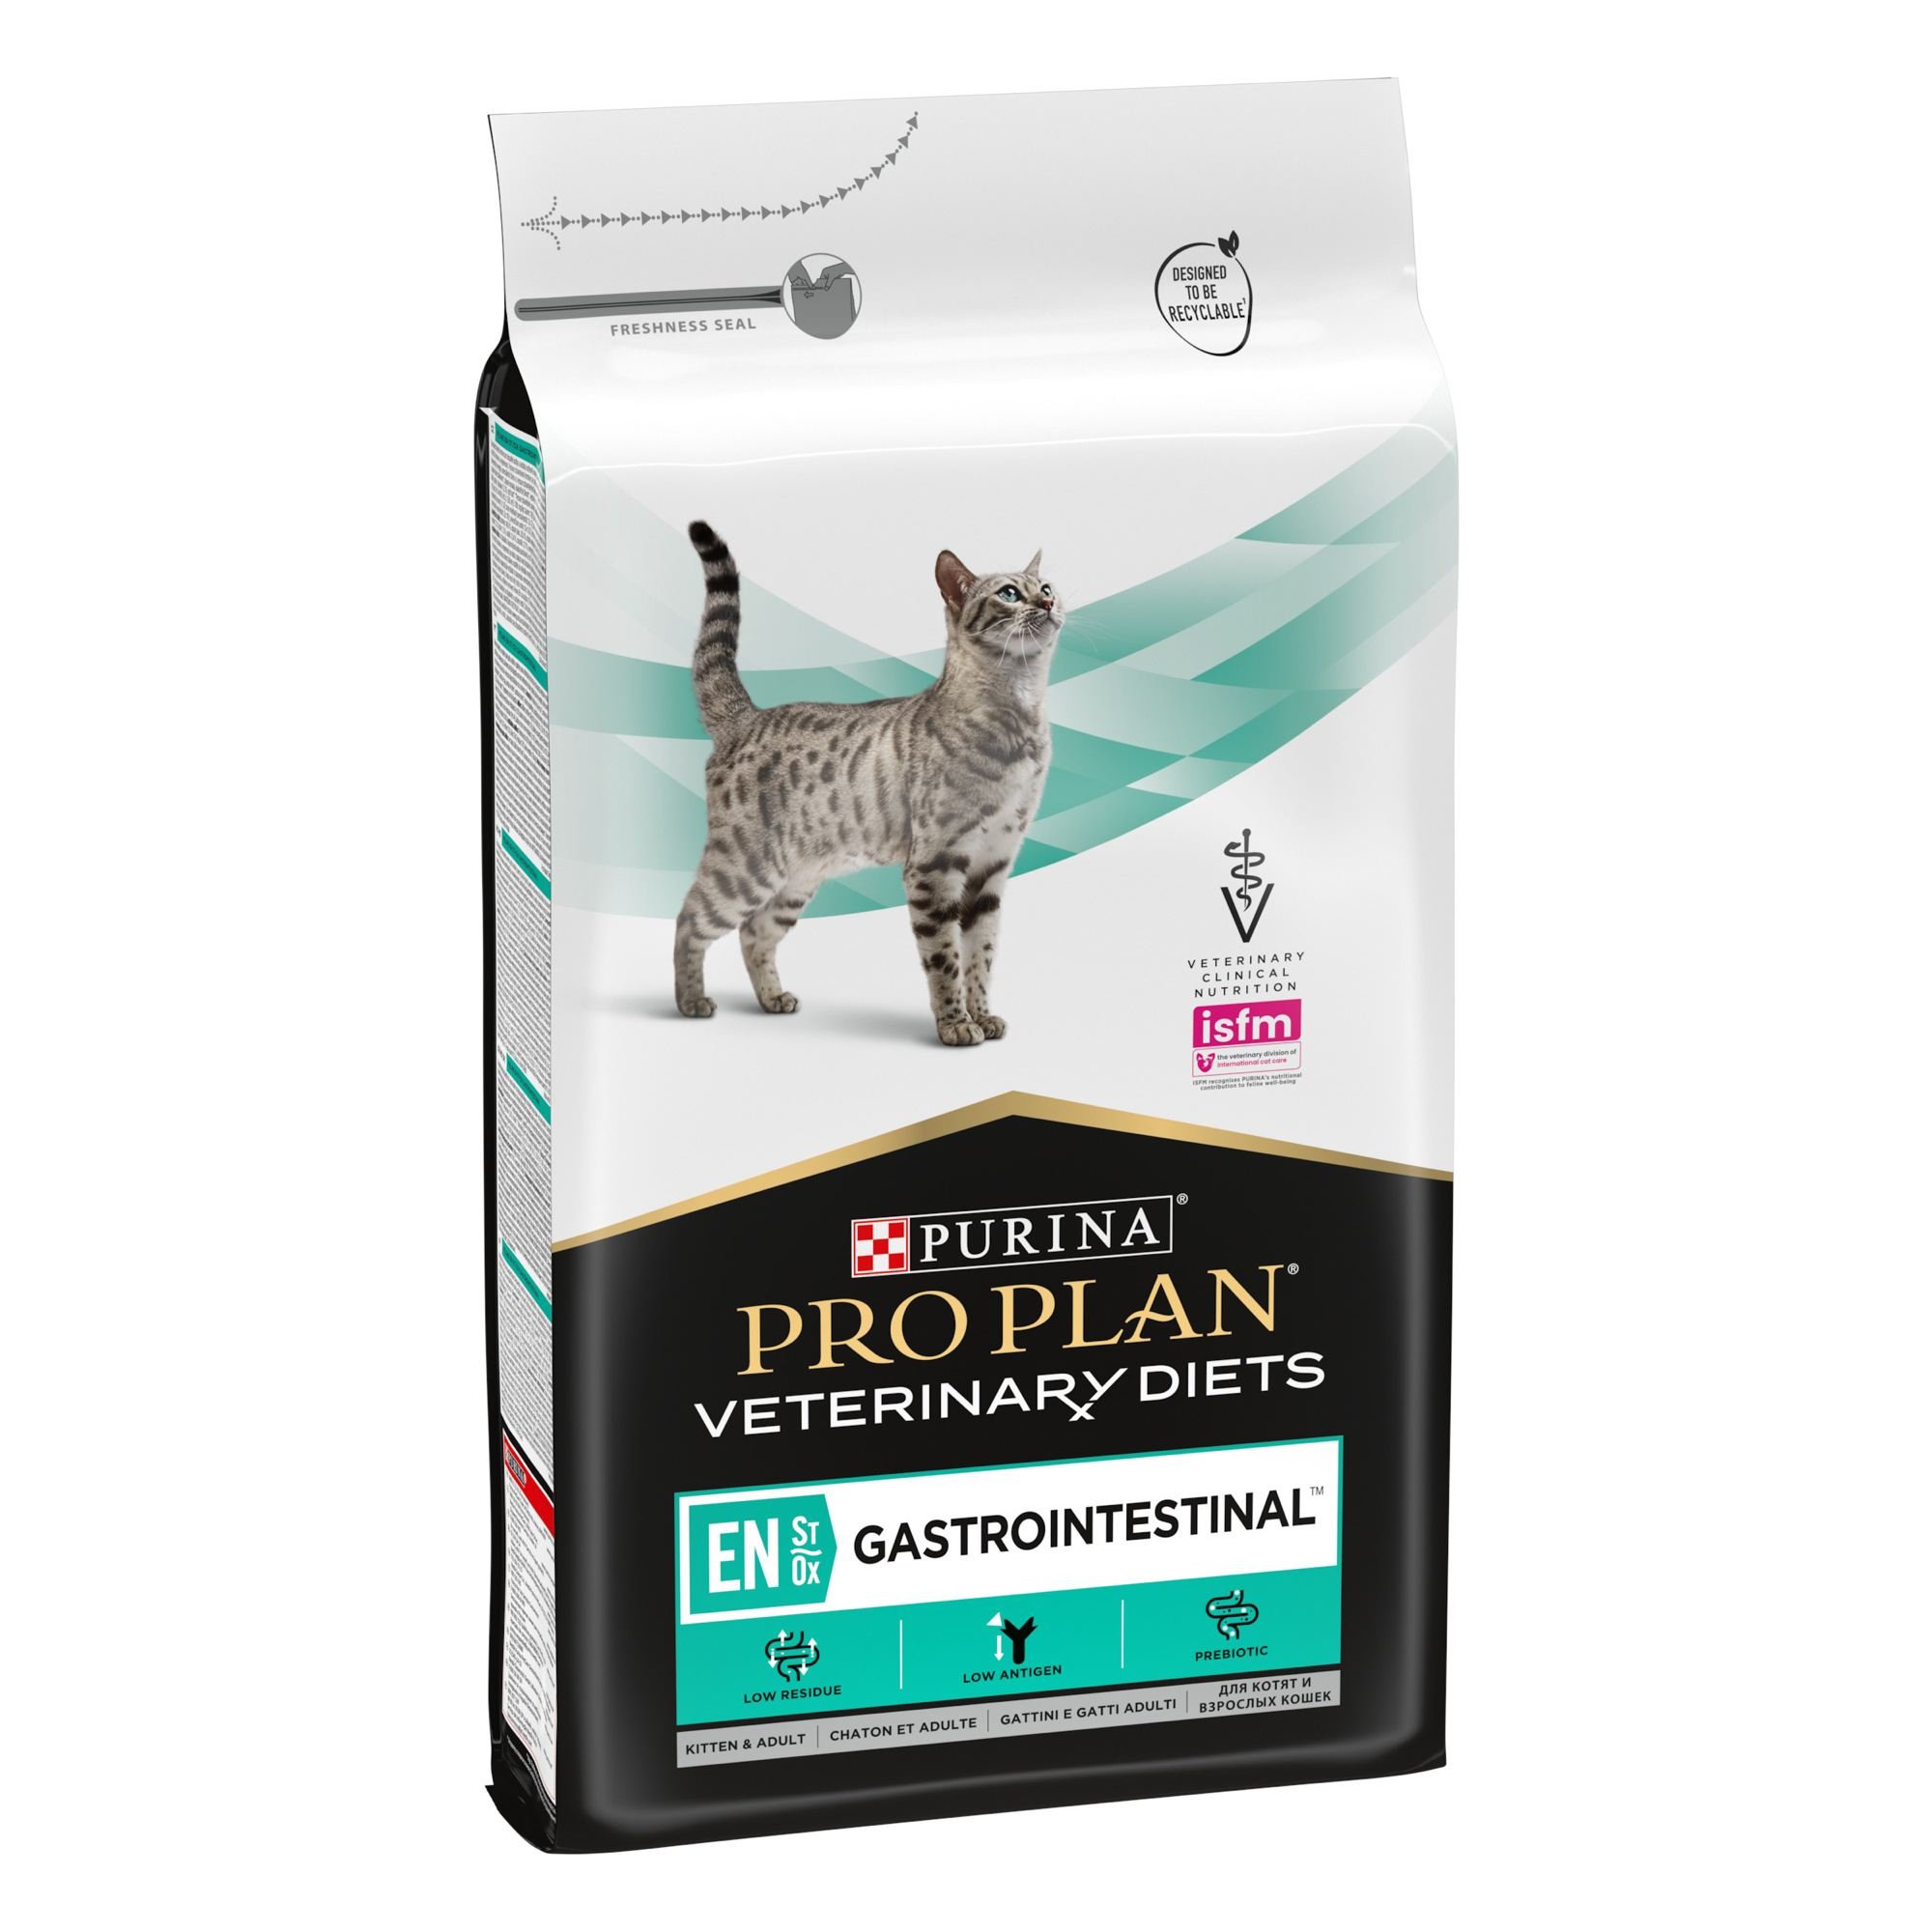 Сухой корм для кошек при заболеваниях желудочно-кишечного тракта Purina Pro Plan Veterinary Diets EN Gastrointestinal, 5 кг - фото 3